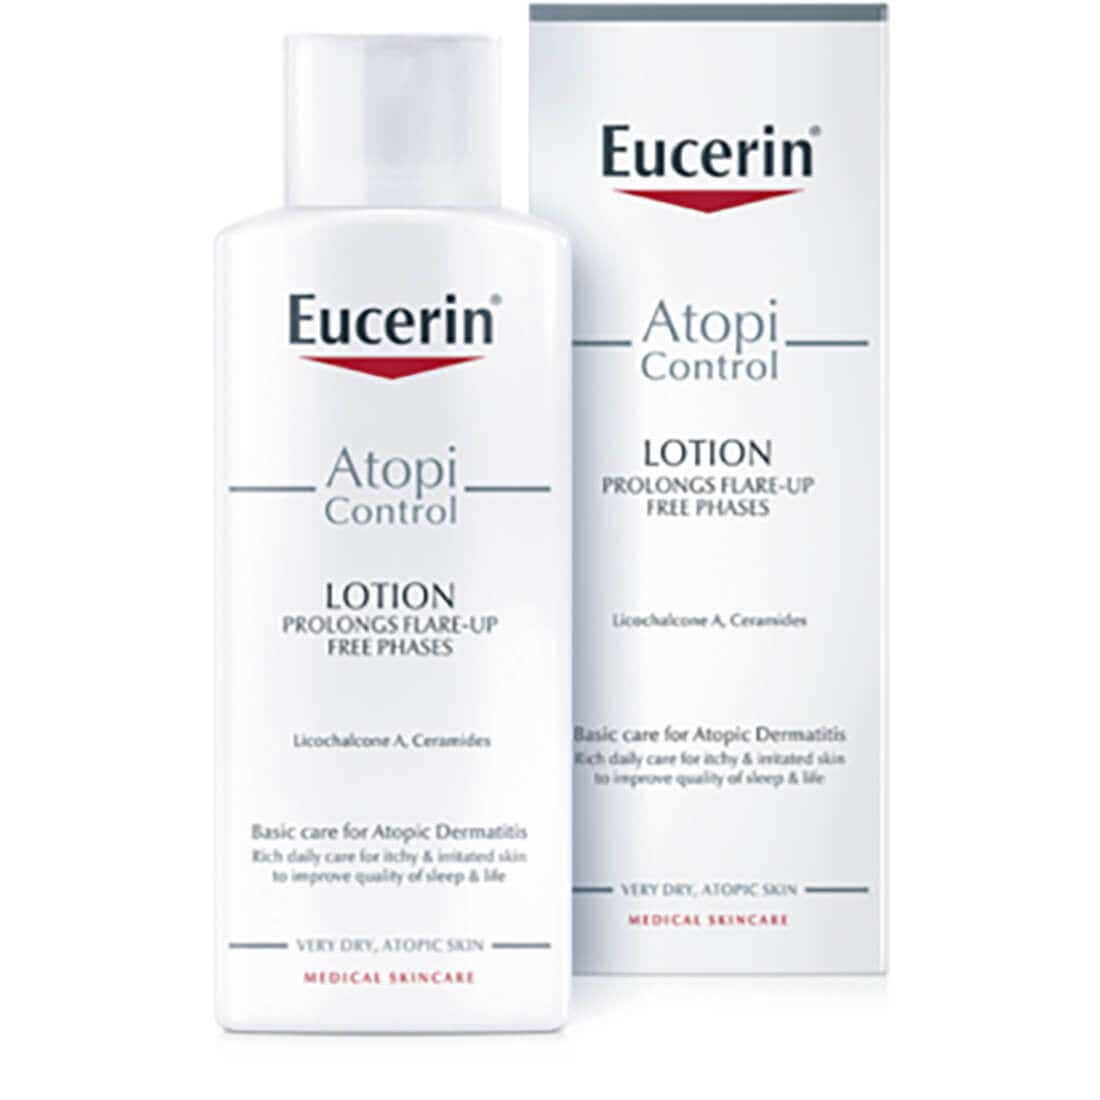 Eucerin Atopi Control Eczema Body Lotion 250 ml